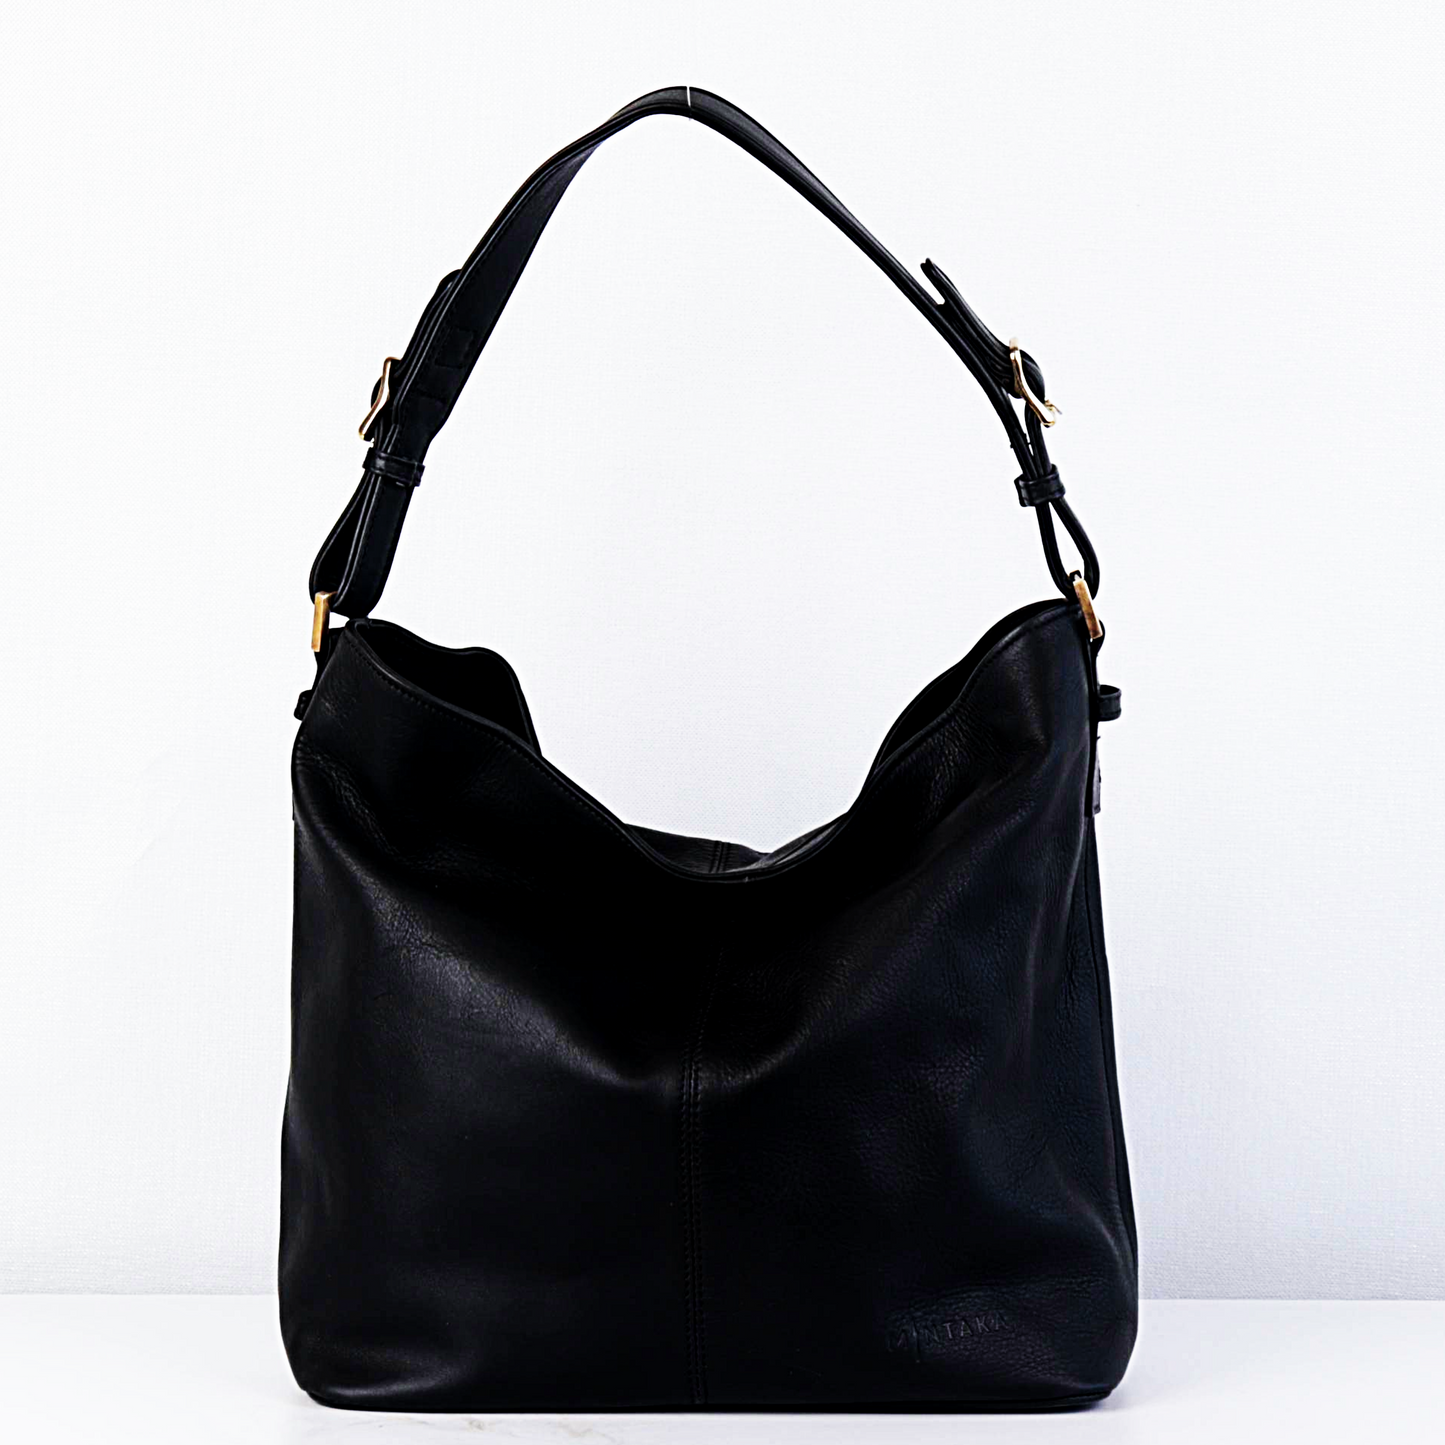 Olivia Hobo Leather Bag